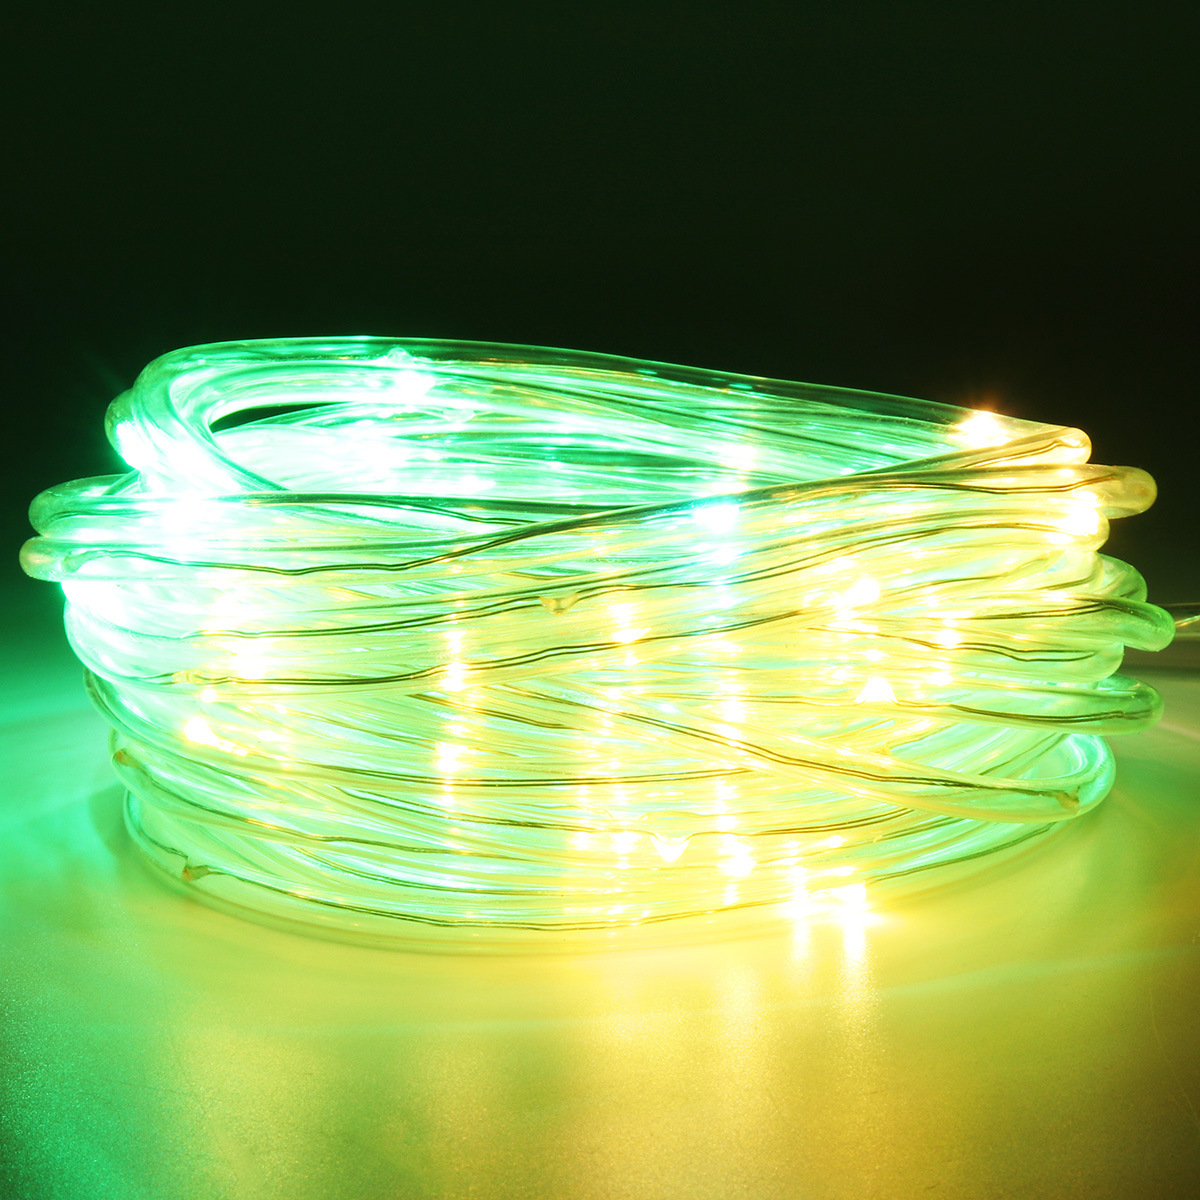 10M-100LED-Outdoor-Tube-Rope-Strip-String-Light-RGB-Lamp-Xmas-Home-Decor-Lights-with-US-Plug-1795568-5